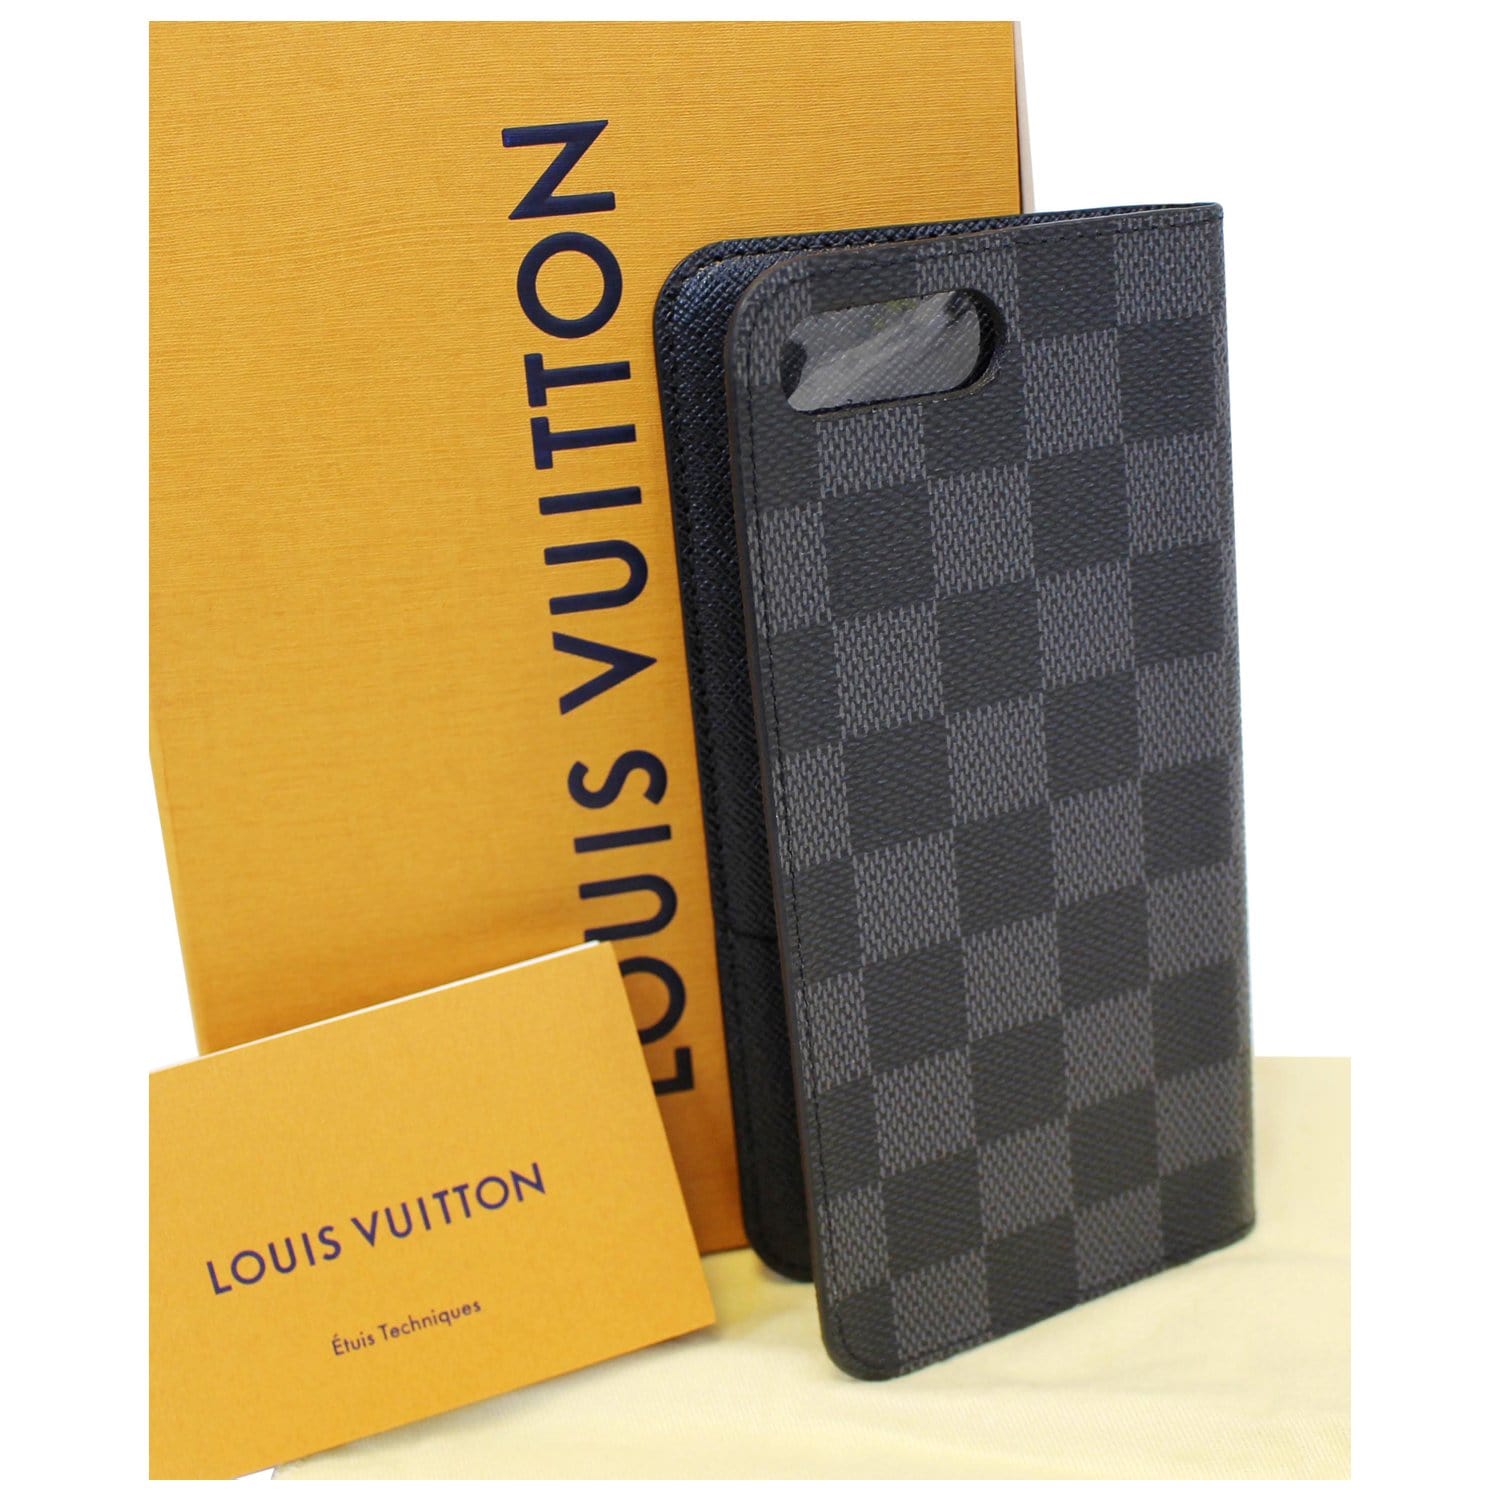 Louis Vuitton x Supreme Epi Leather iPhone 7 Plus Folio Case - Red Phone  Cases, Technology - LOUSU20939